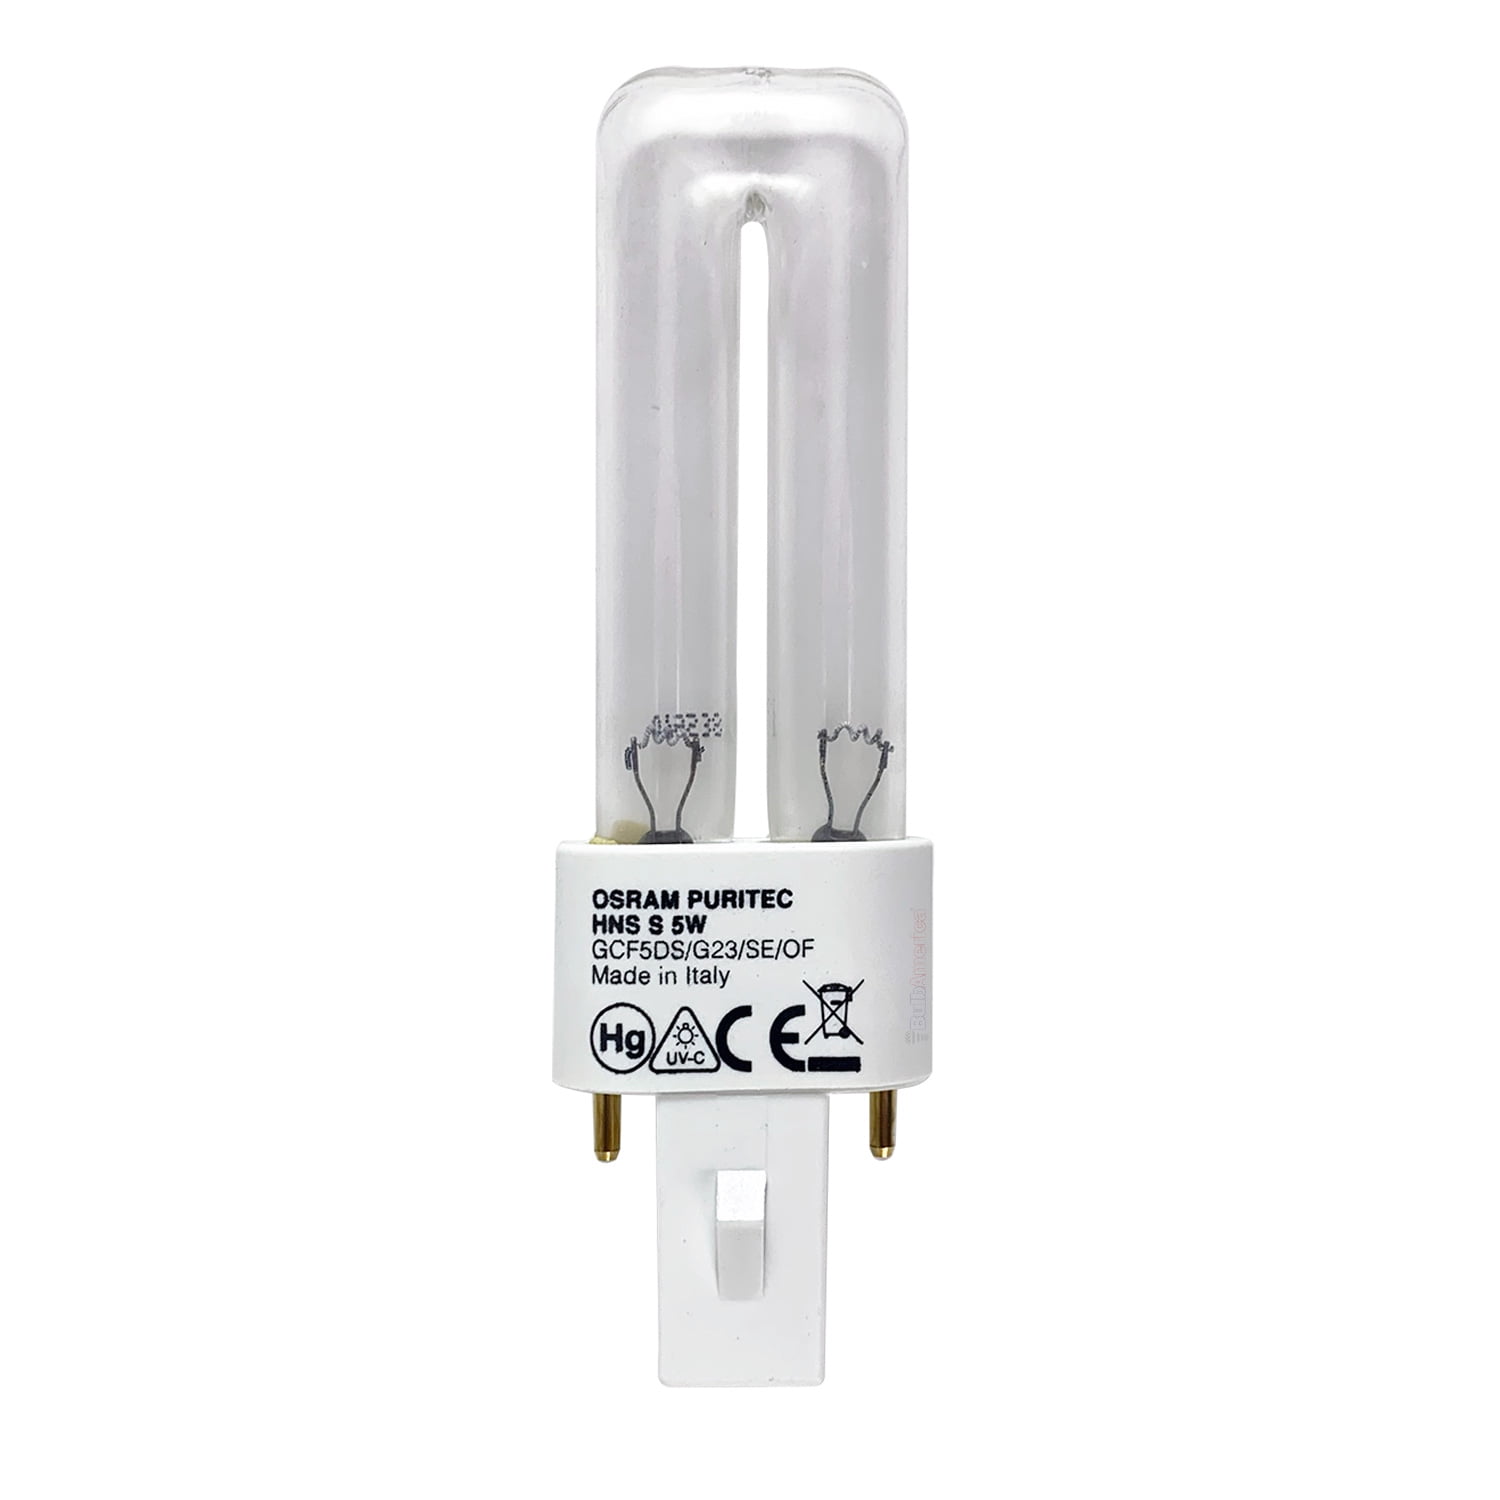 ESSENZA Replacement Light Bulb For Wax Warmer 120v 25w Gu10 1 